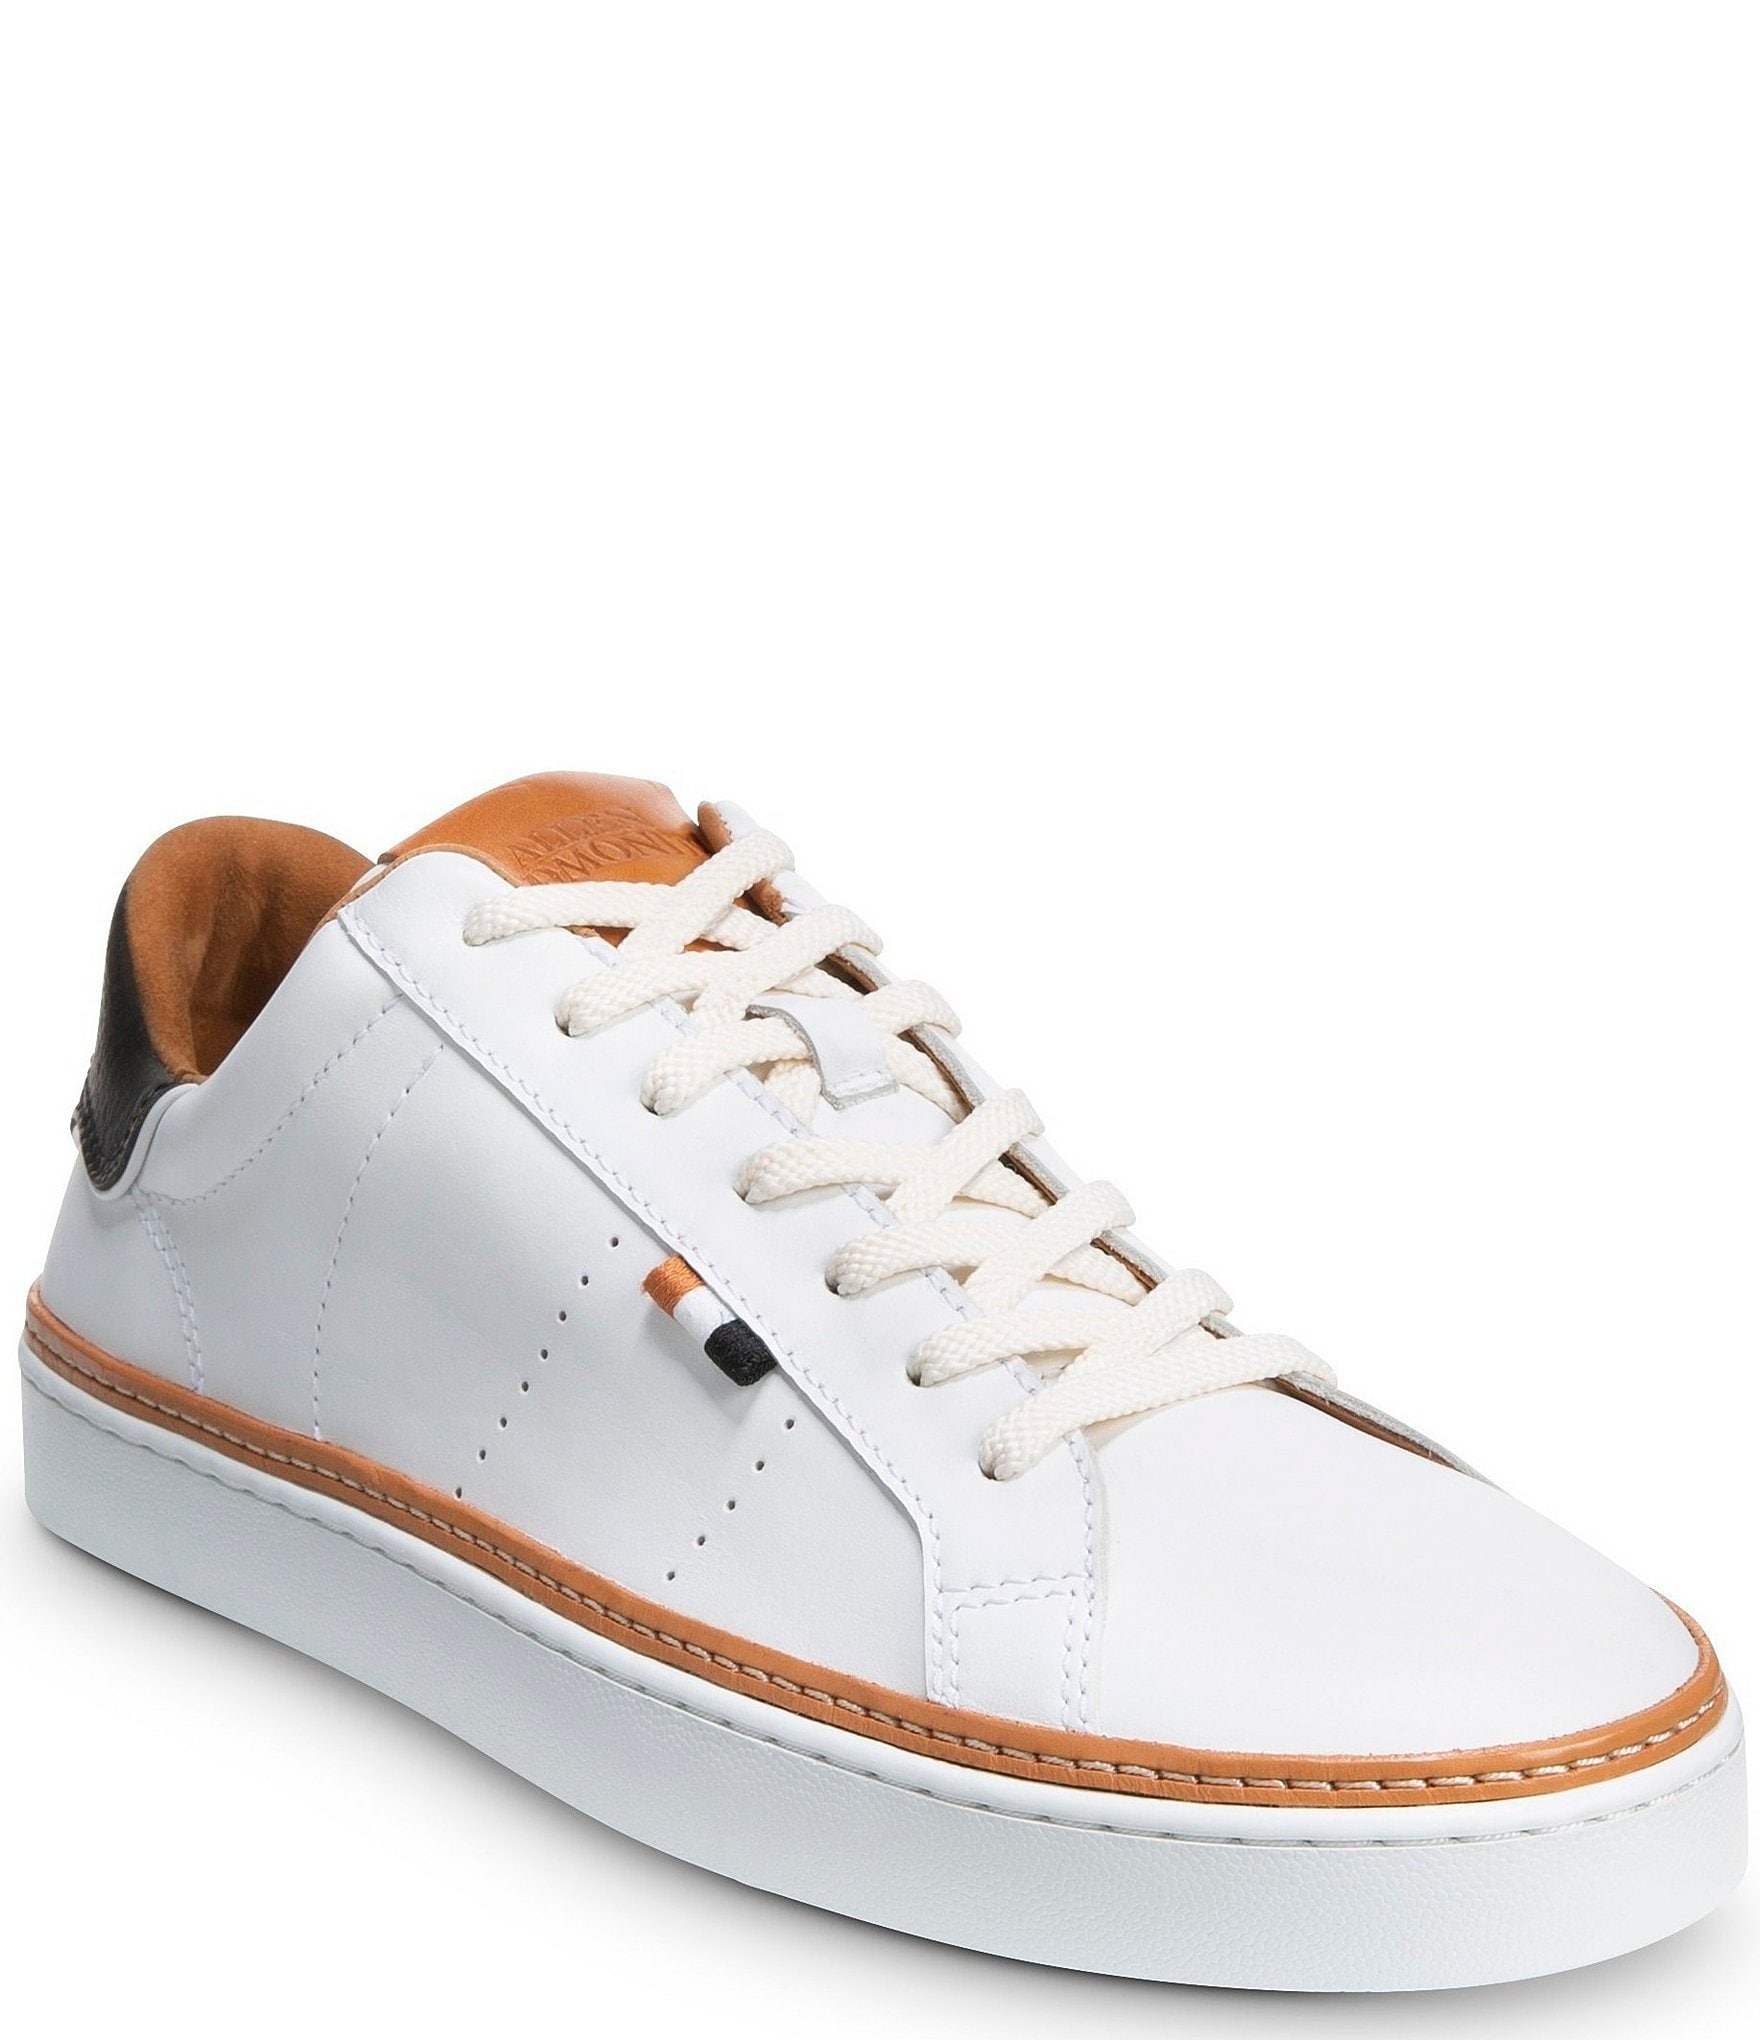 Allen-Edmonds Men's Shoes | Dillard's